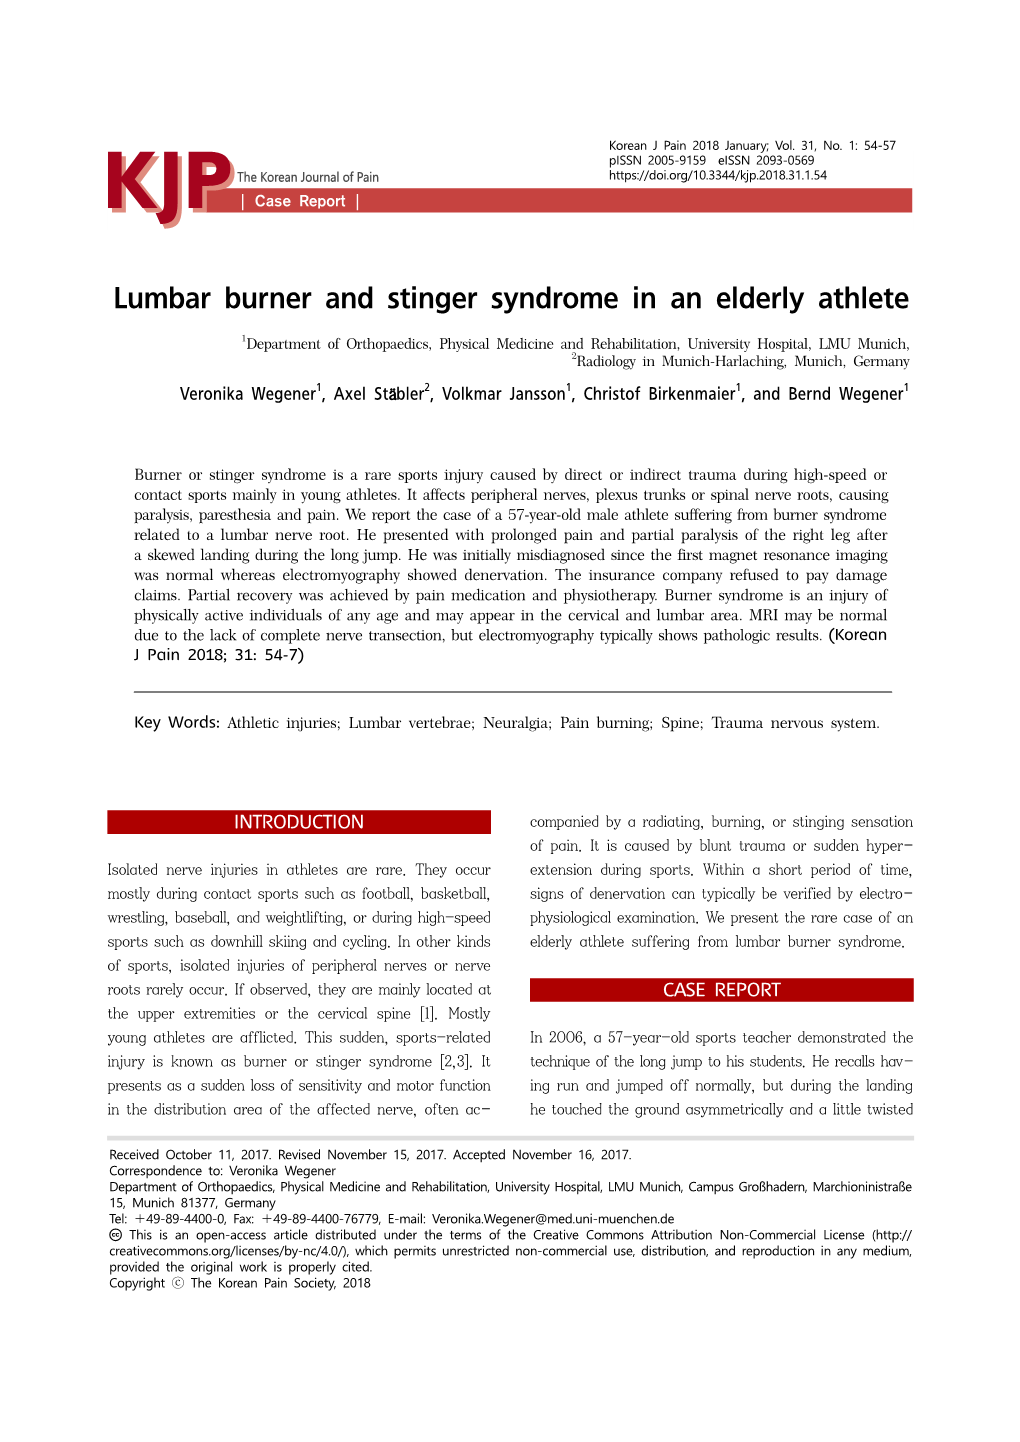 Lumbar Burner and Stinger Syndrome in an Elderly Athlete